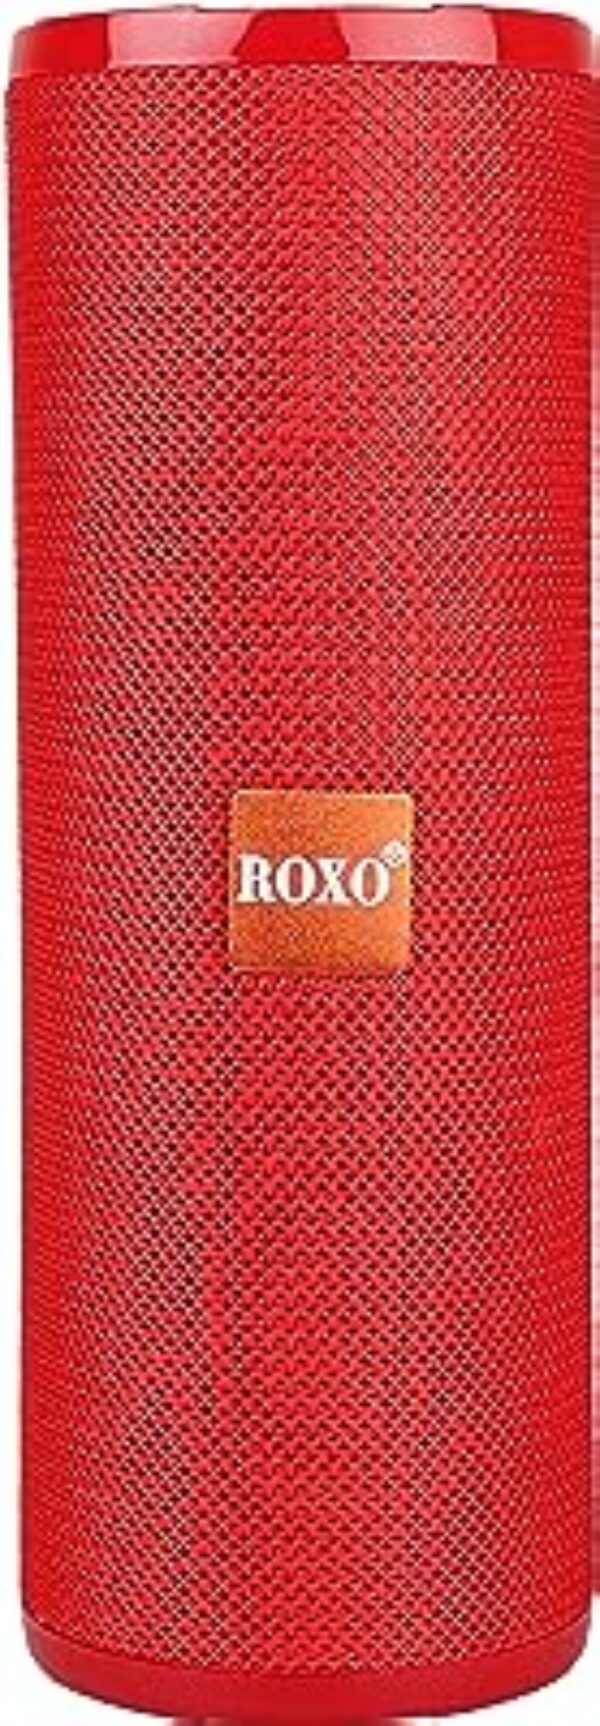 ROXO TG 149 Wireless Bluetooth Speaker (RED)